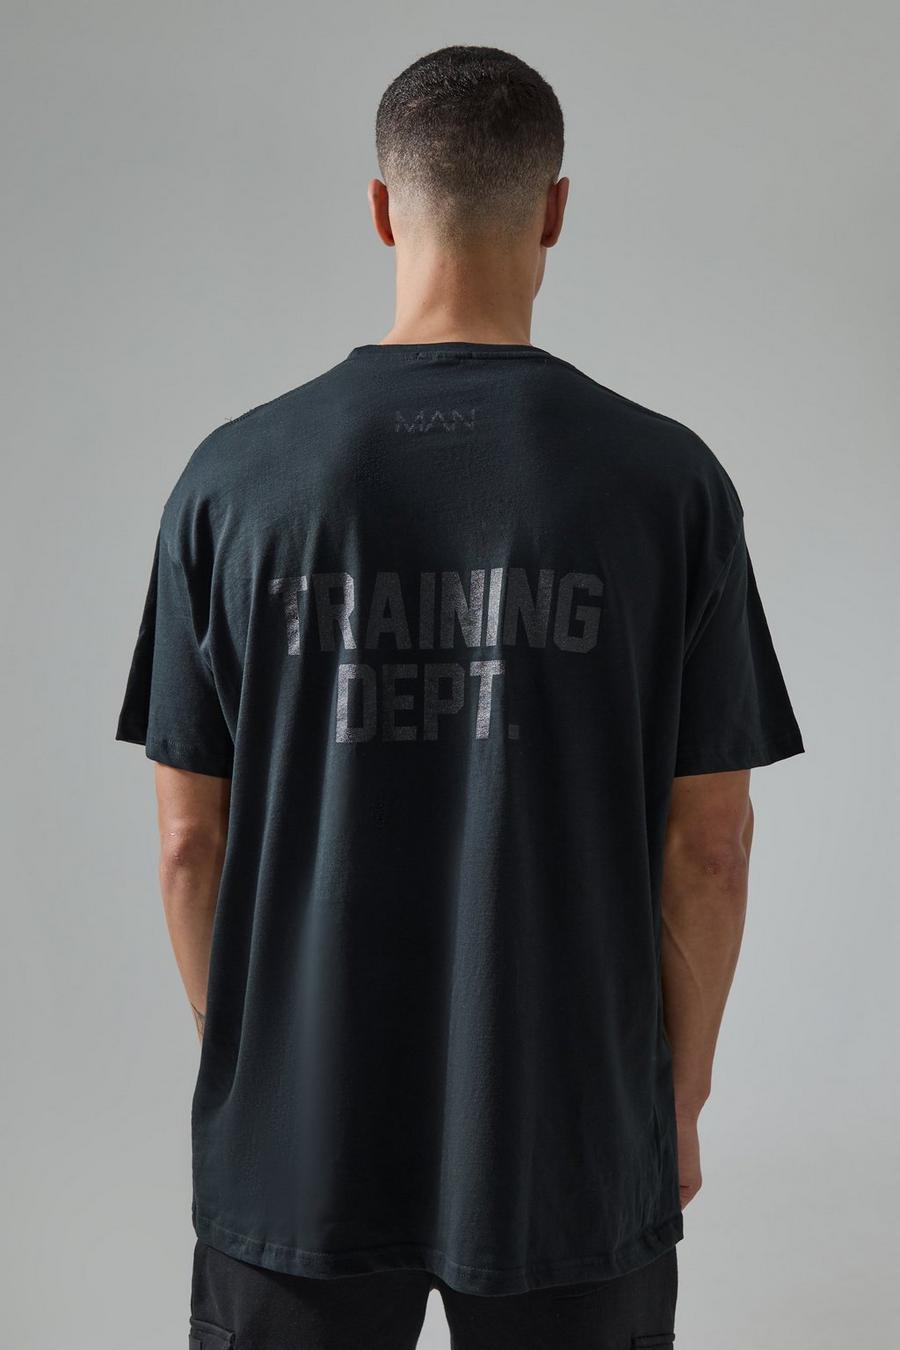 Oversize T-Shirt mit Active Training Dept Print, Black